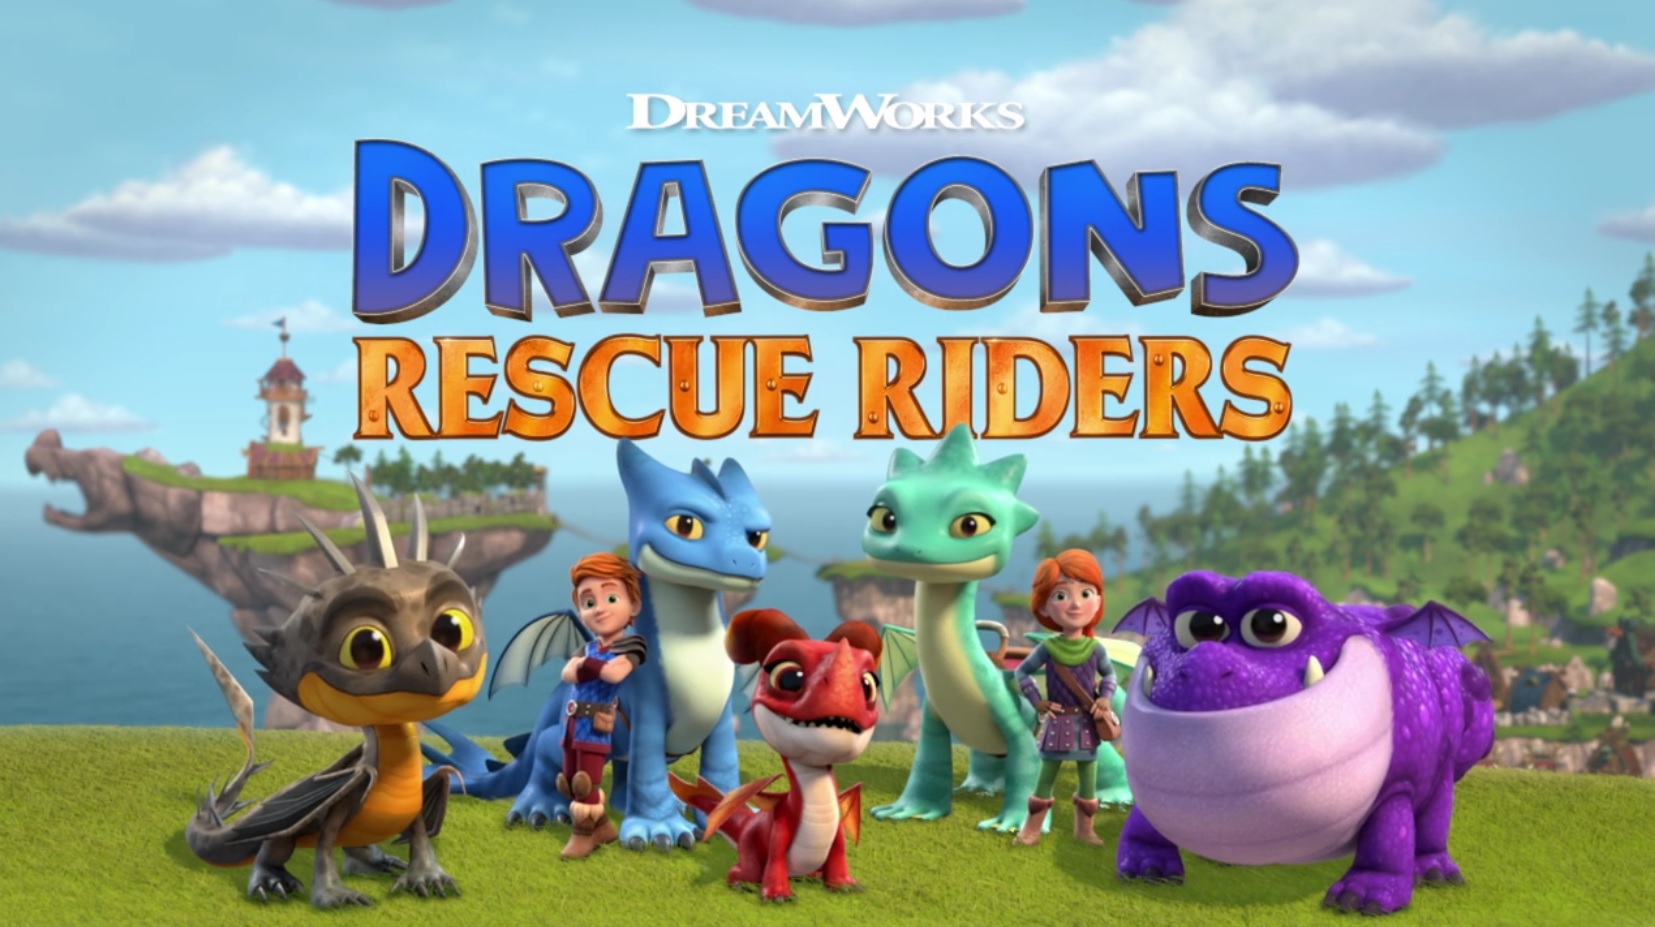 Netflix Announces “Dreamworks Dragons: Rescue Riders”